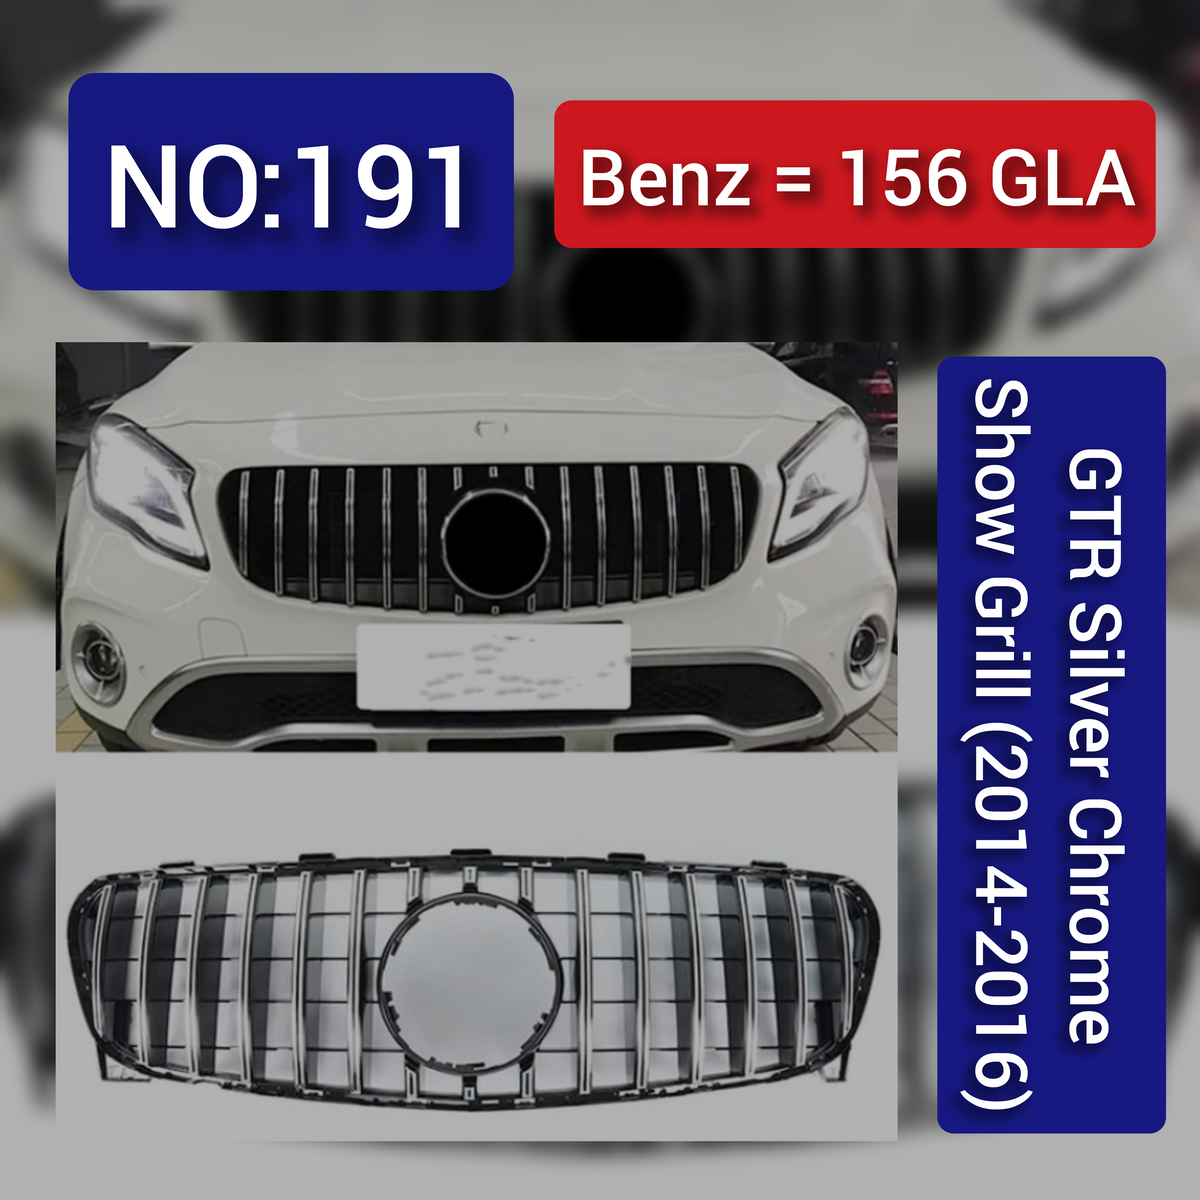 Benz = 156 GLA GTR Silver Chrome Show Grill (2014-2016) Tag 191